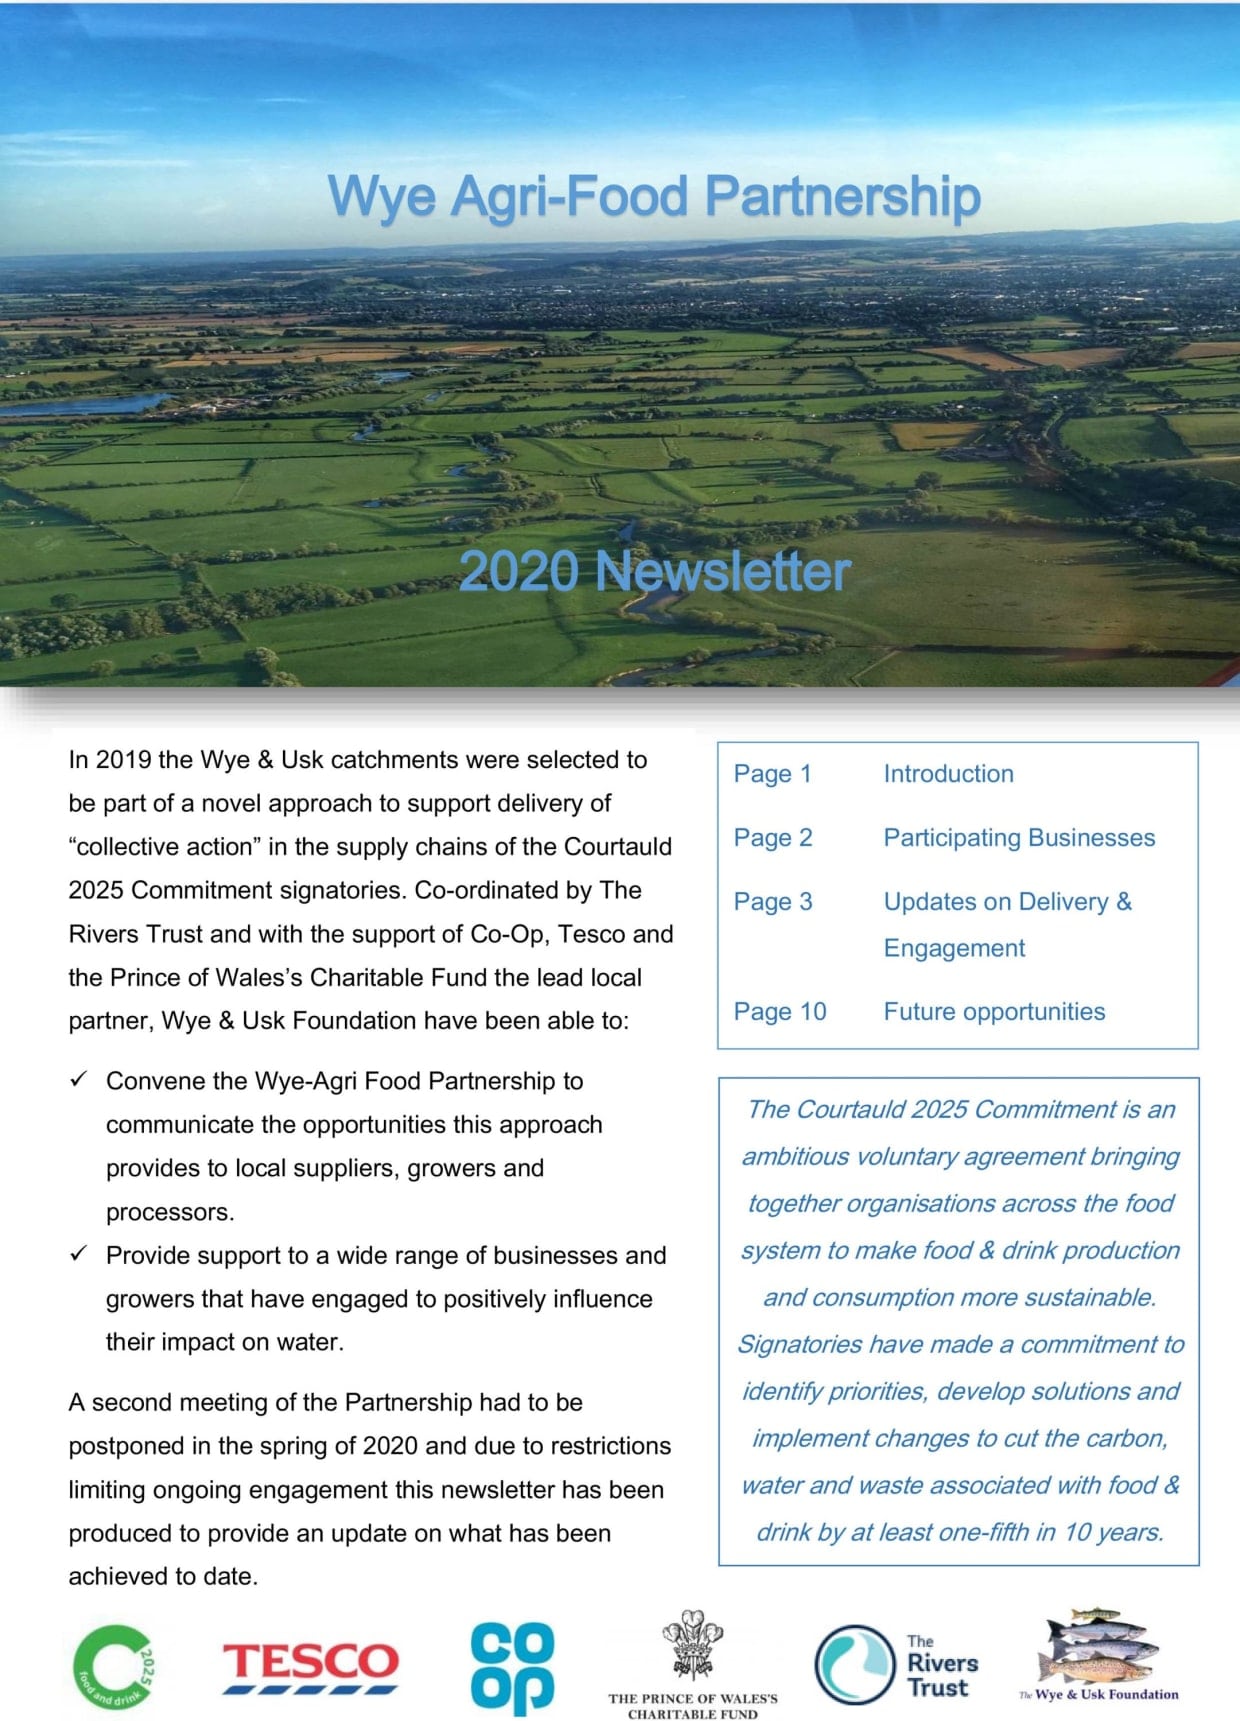 The 2020 Wye Agri Food Partnership Newsletter